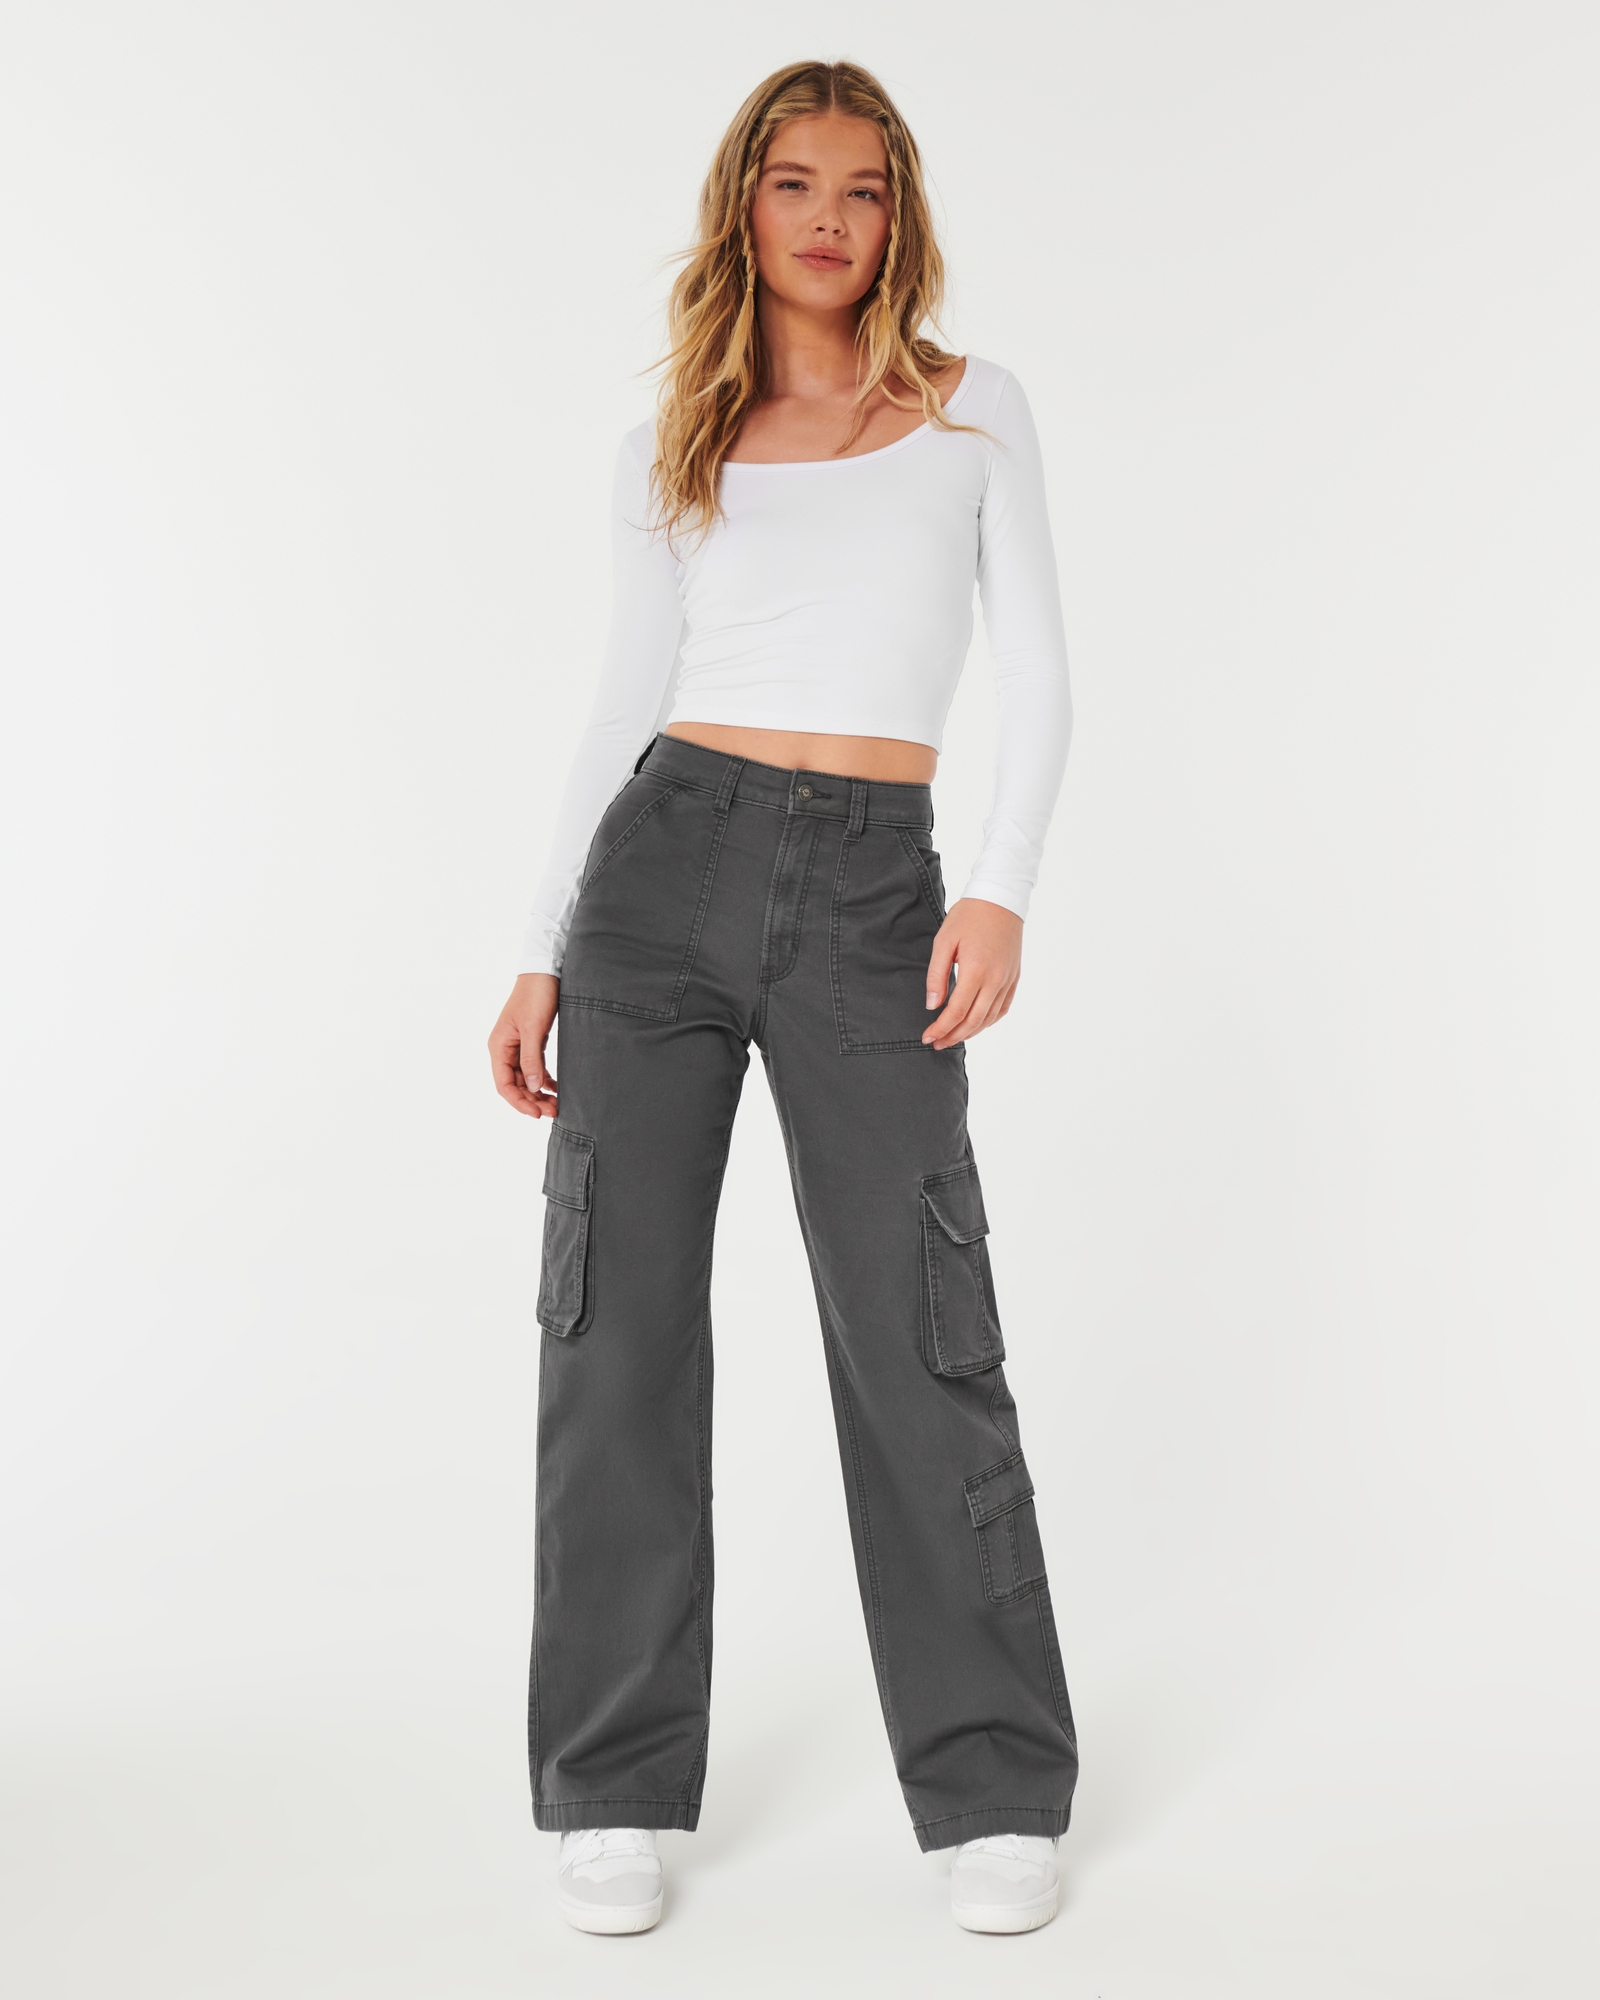 Grey Cargo Pants for Women